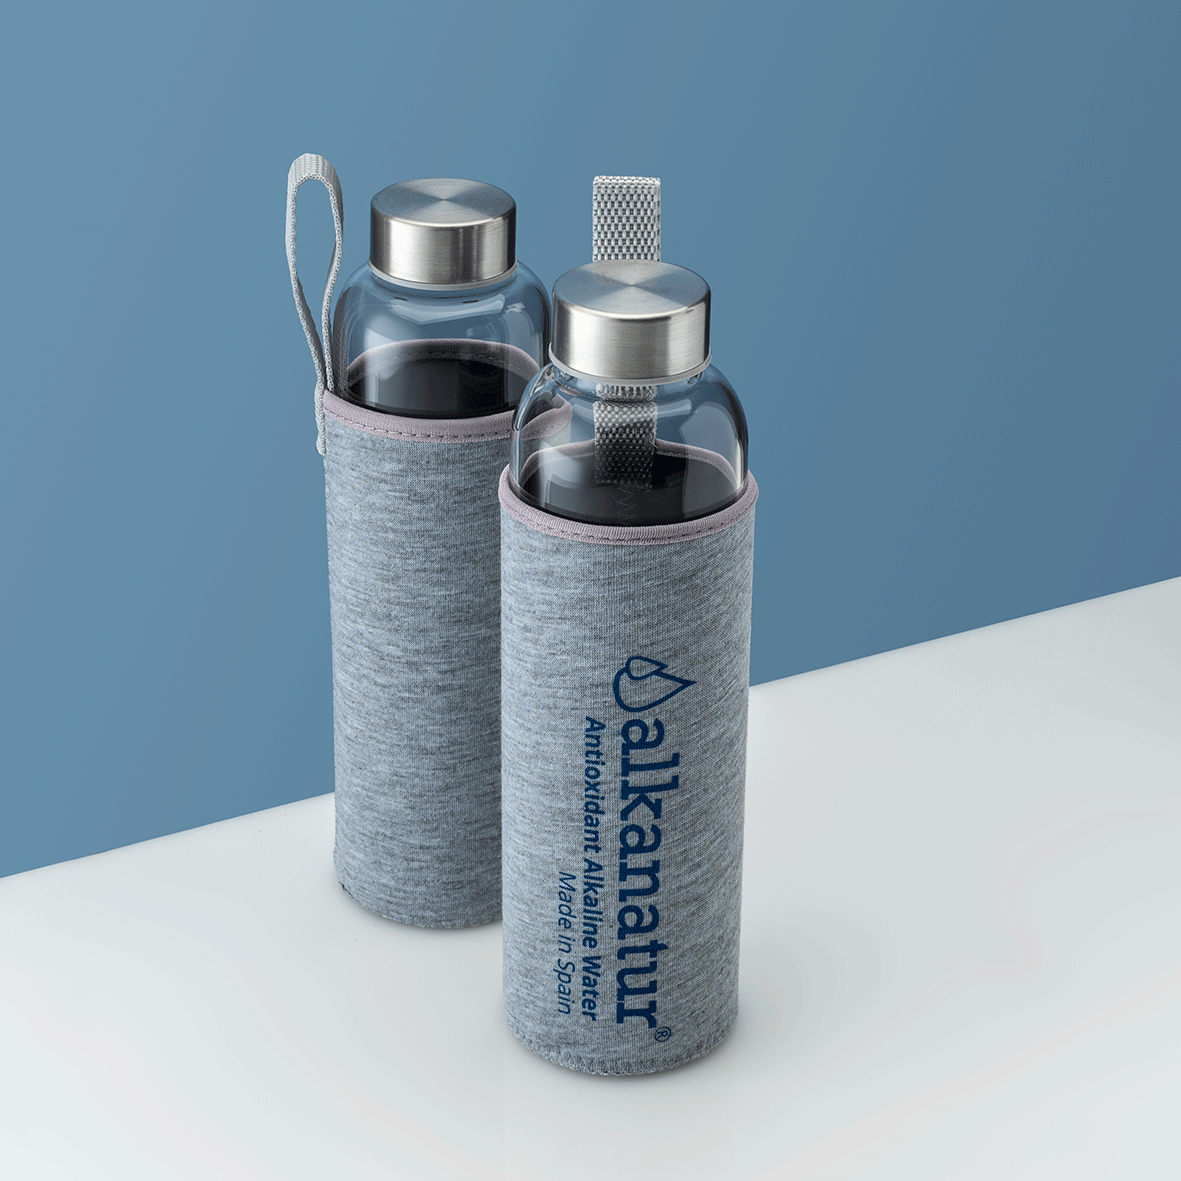 Replacement Filter for Shower Filter 2.0 with Borosilicate Glass Bottle bundle - alkanatur - Bundle - Alkanatur